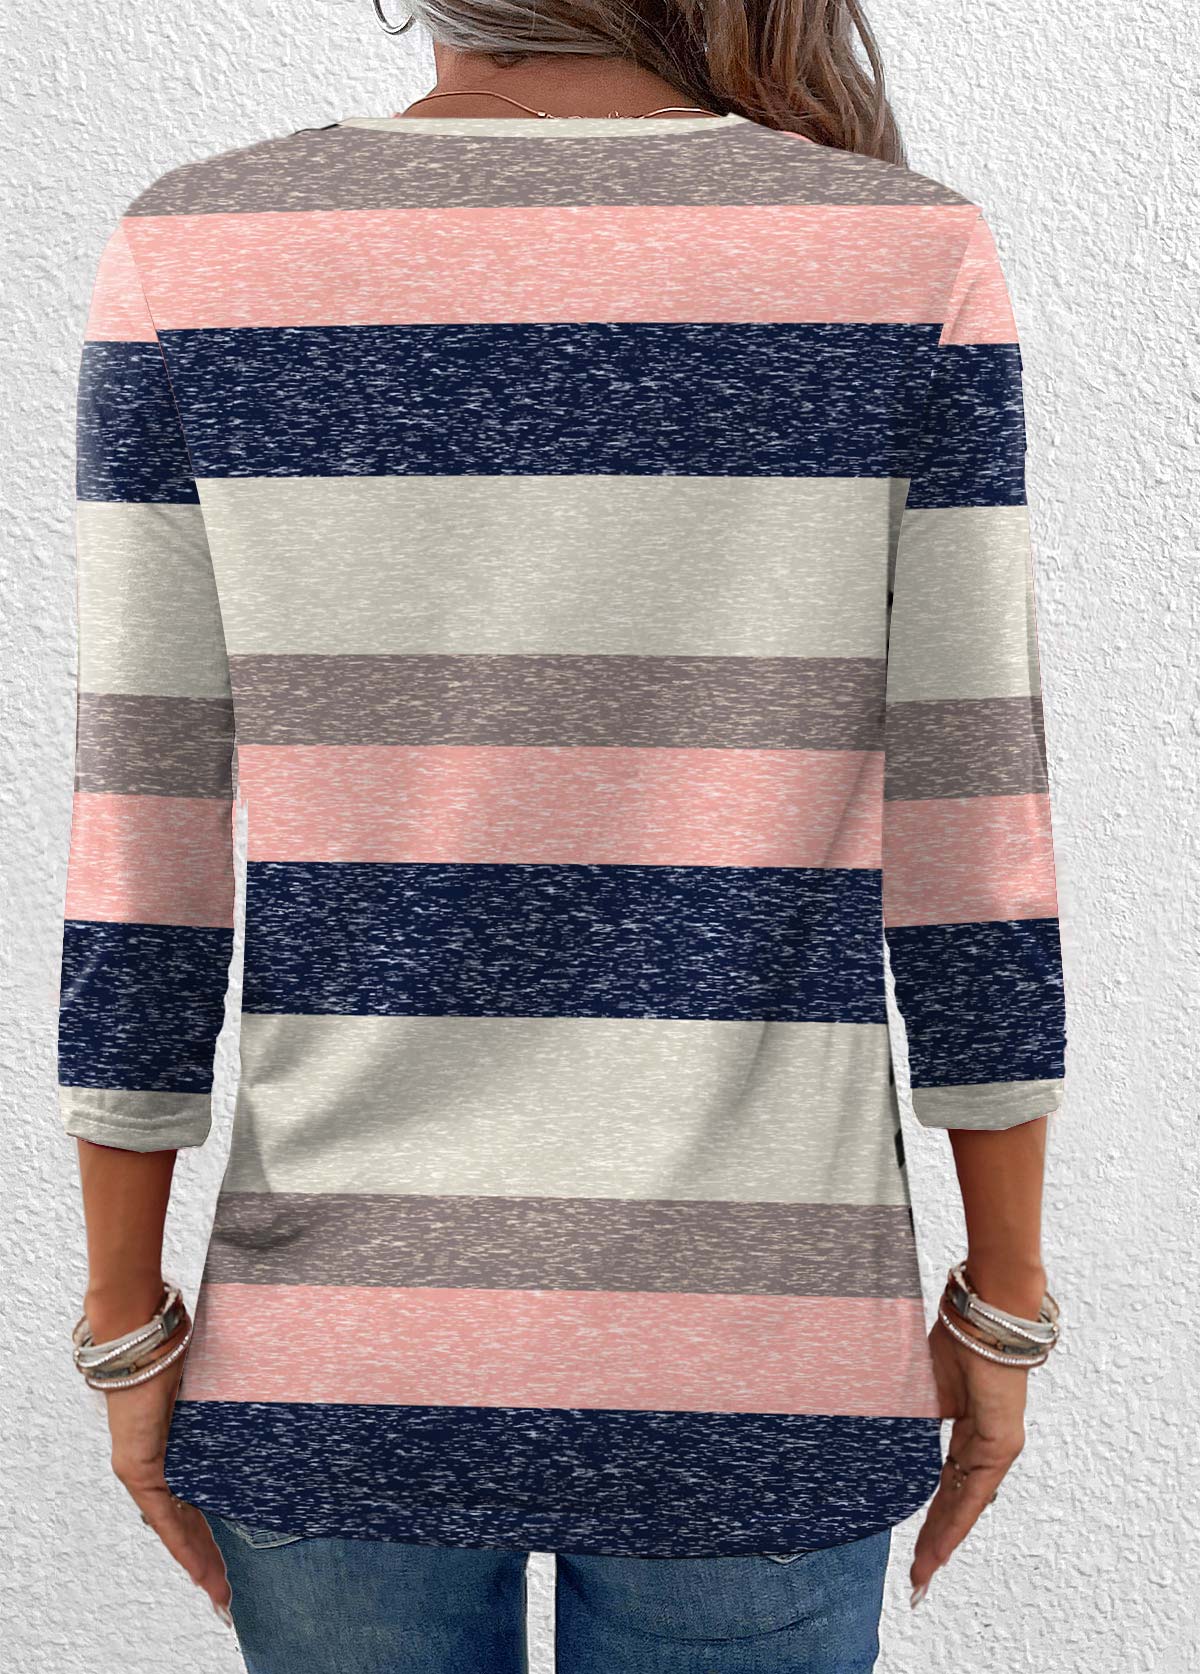 Striped Criss Cross Multi Color 3/4 Sleeve T Shirt